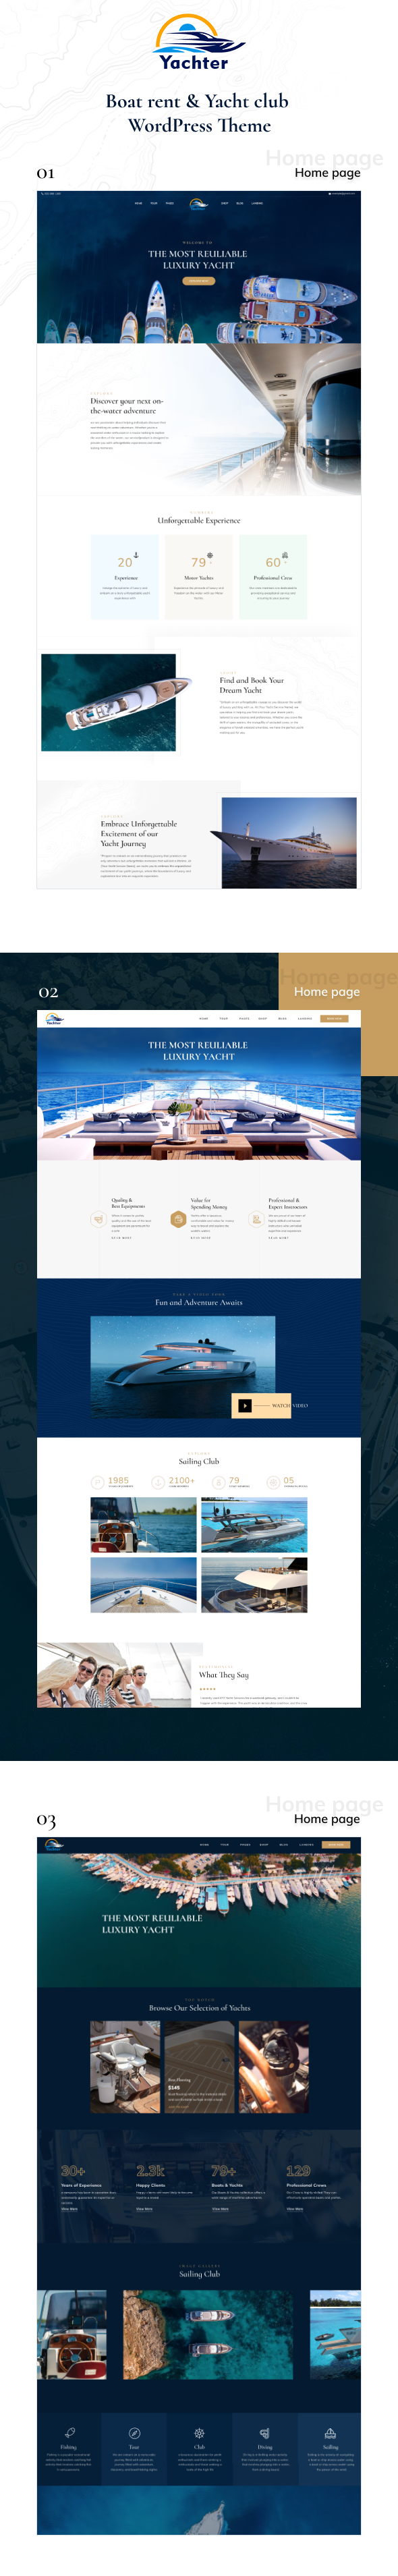 Yachter - Yacht and Boat Rental Service WordPress Theme - 3